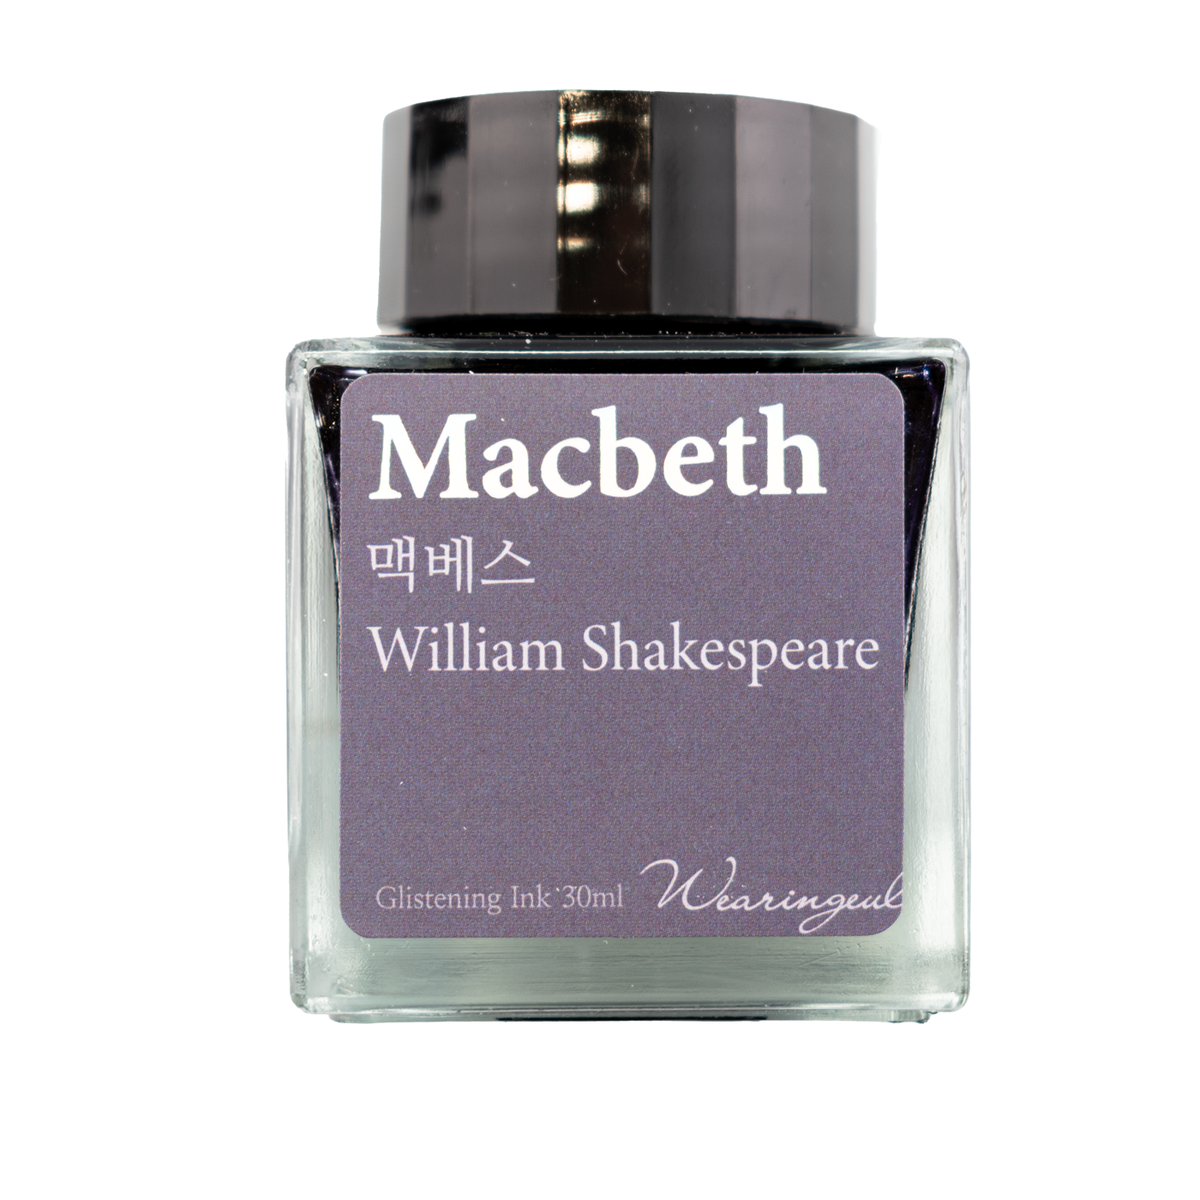 Wearingeul Macbeth